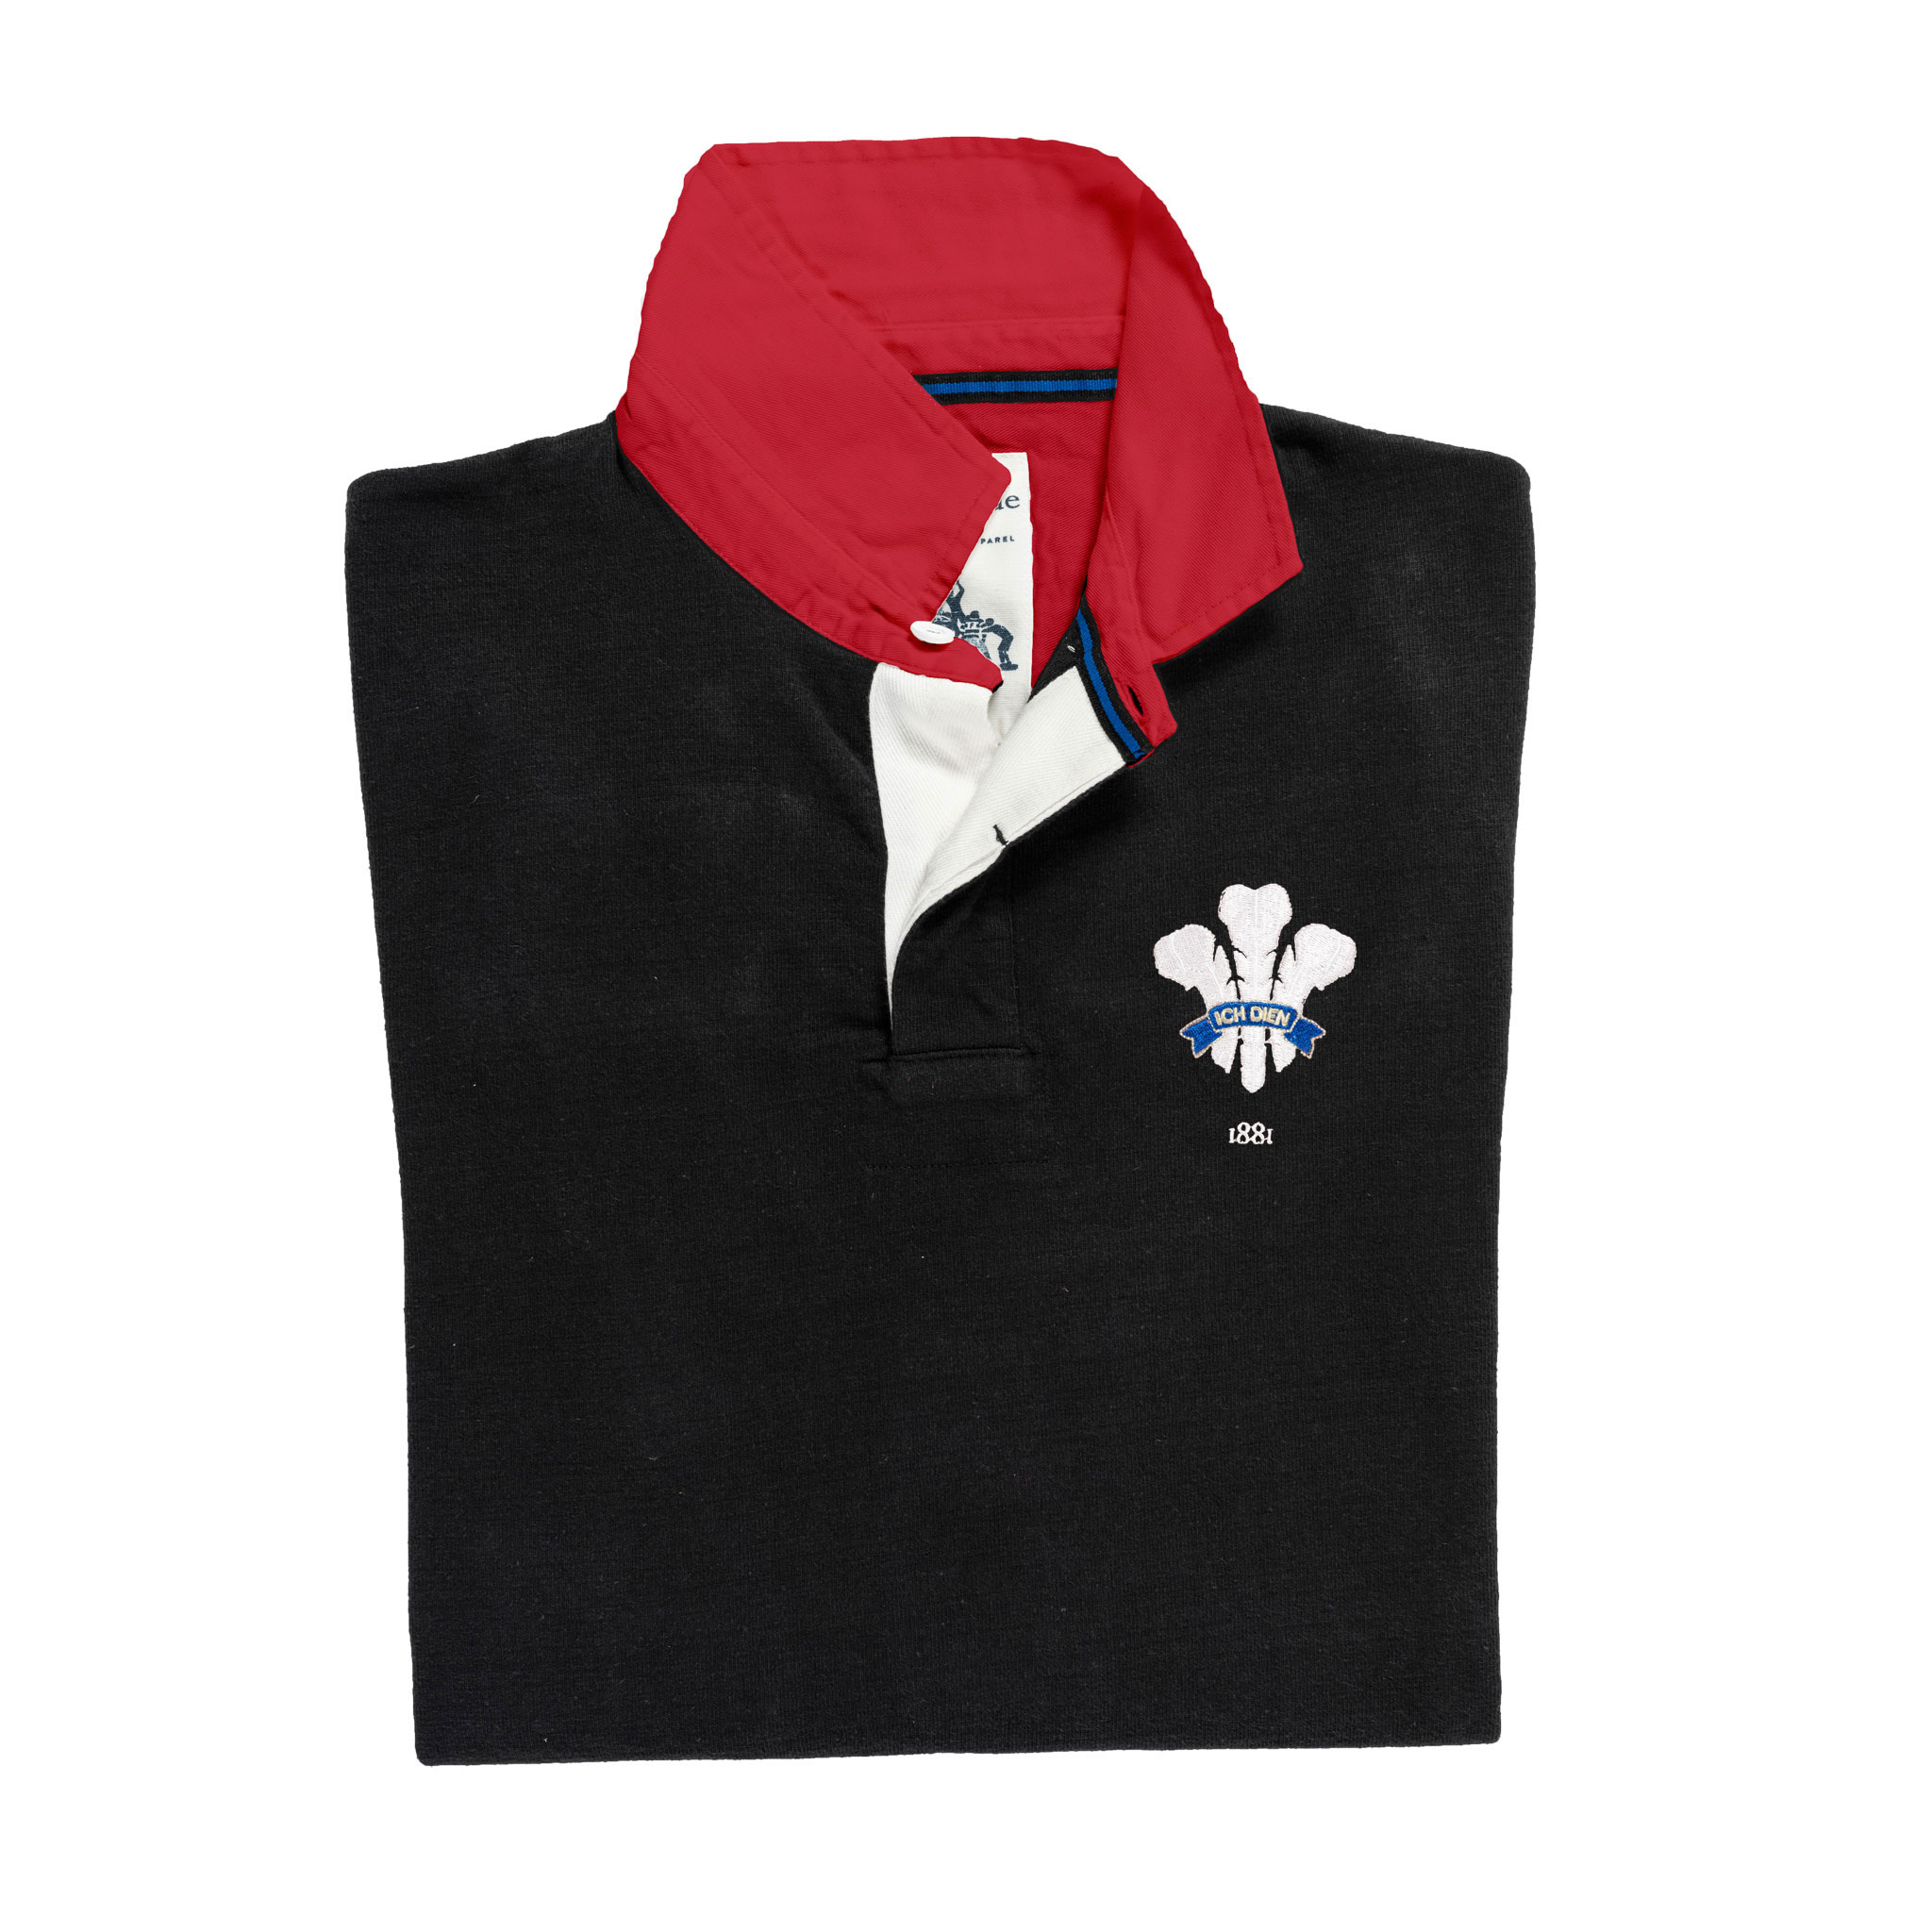 Wales 1881 Black Vintage Rugby Shirt_Folded